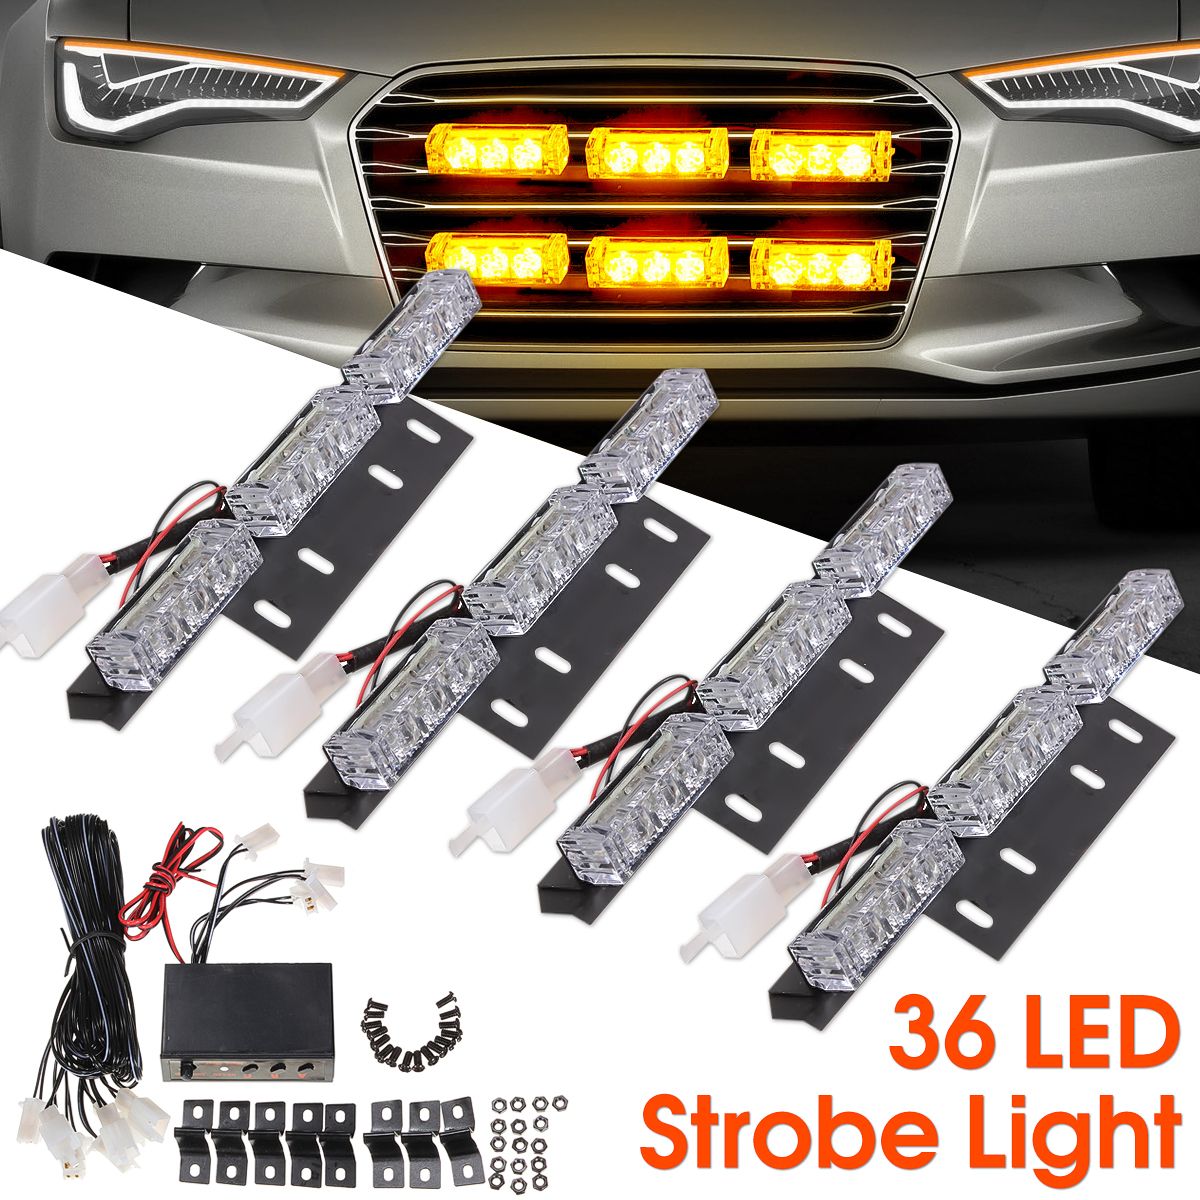 LED-Car-Grille-Strobe-Light-Mini-Police-Emergency-Warning-Signal-Flash-Lamp-18W-12V-Amber-4PCS-912804